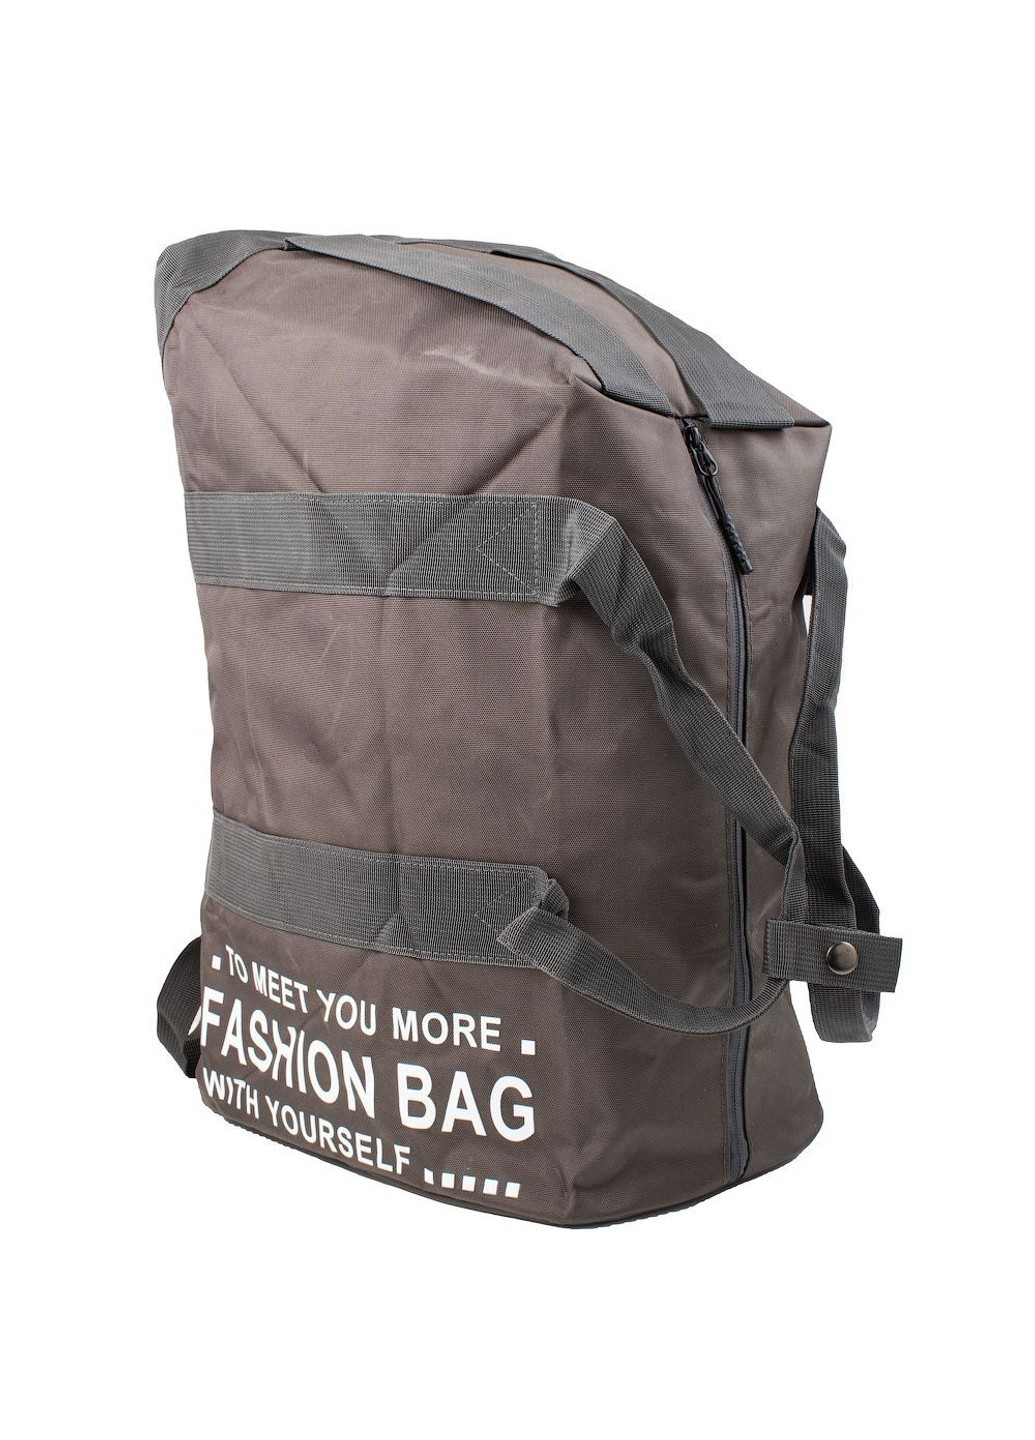 Мужская спортивная сумка-рюкзак 4DETBI2101-4 Valiria Fashion (271813663)